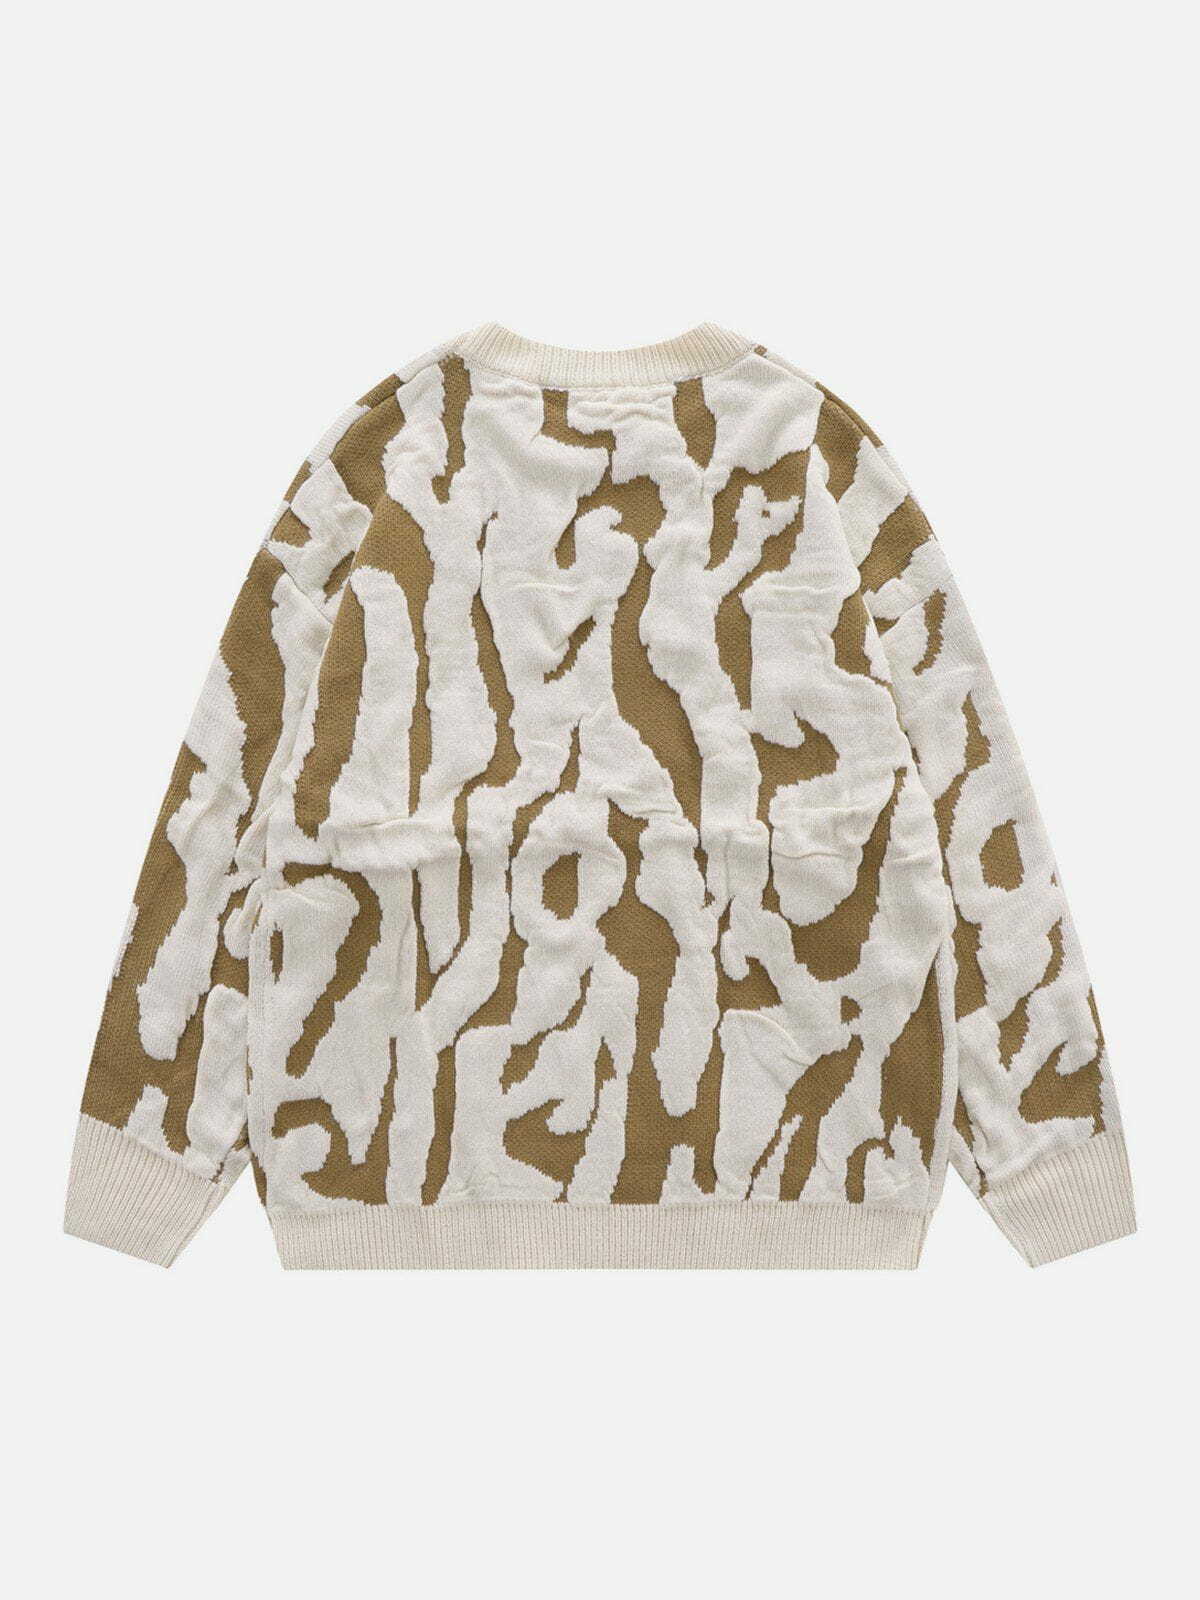 zebra print jacquard sweater edgy & vibrant streetwear 3730